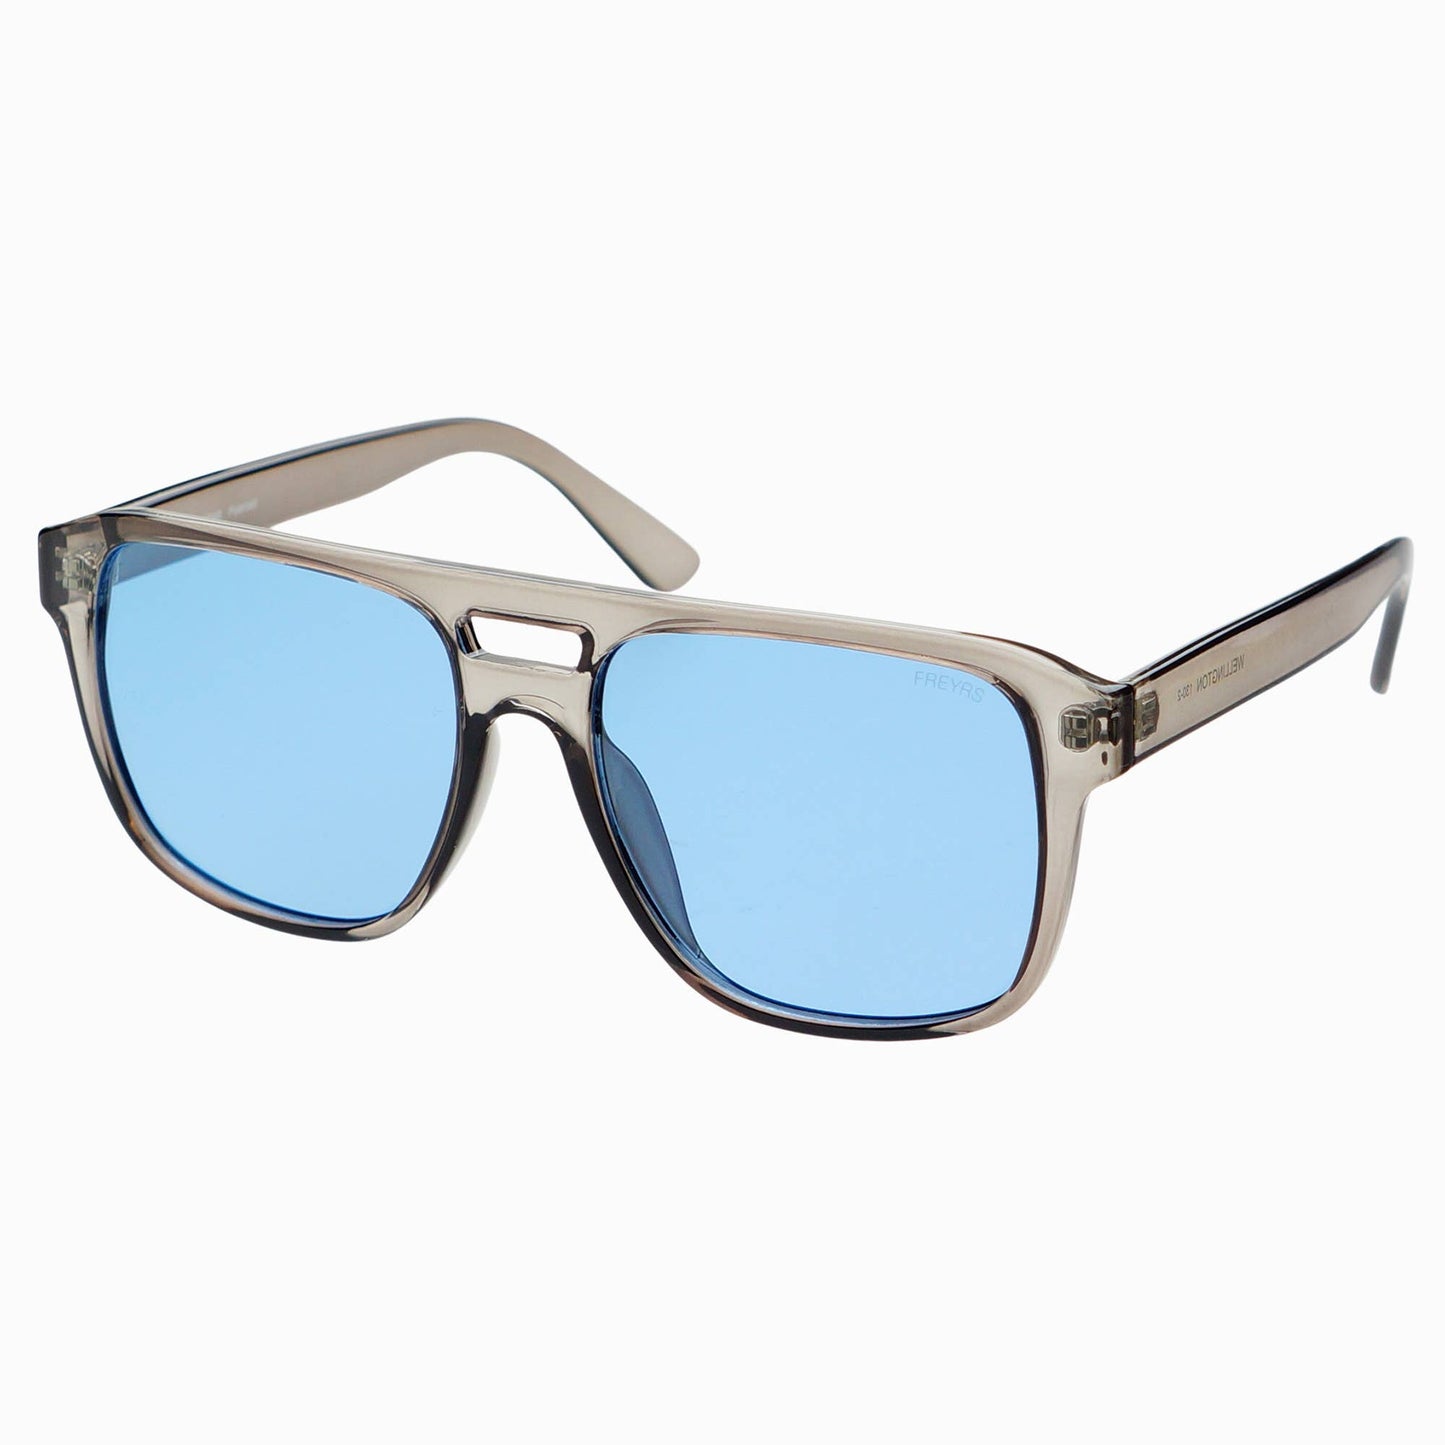 Wellington Polarized Aviator Sunglasses